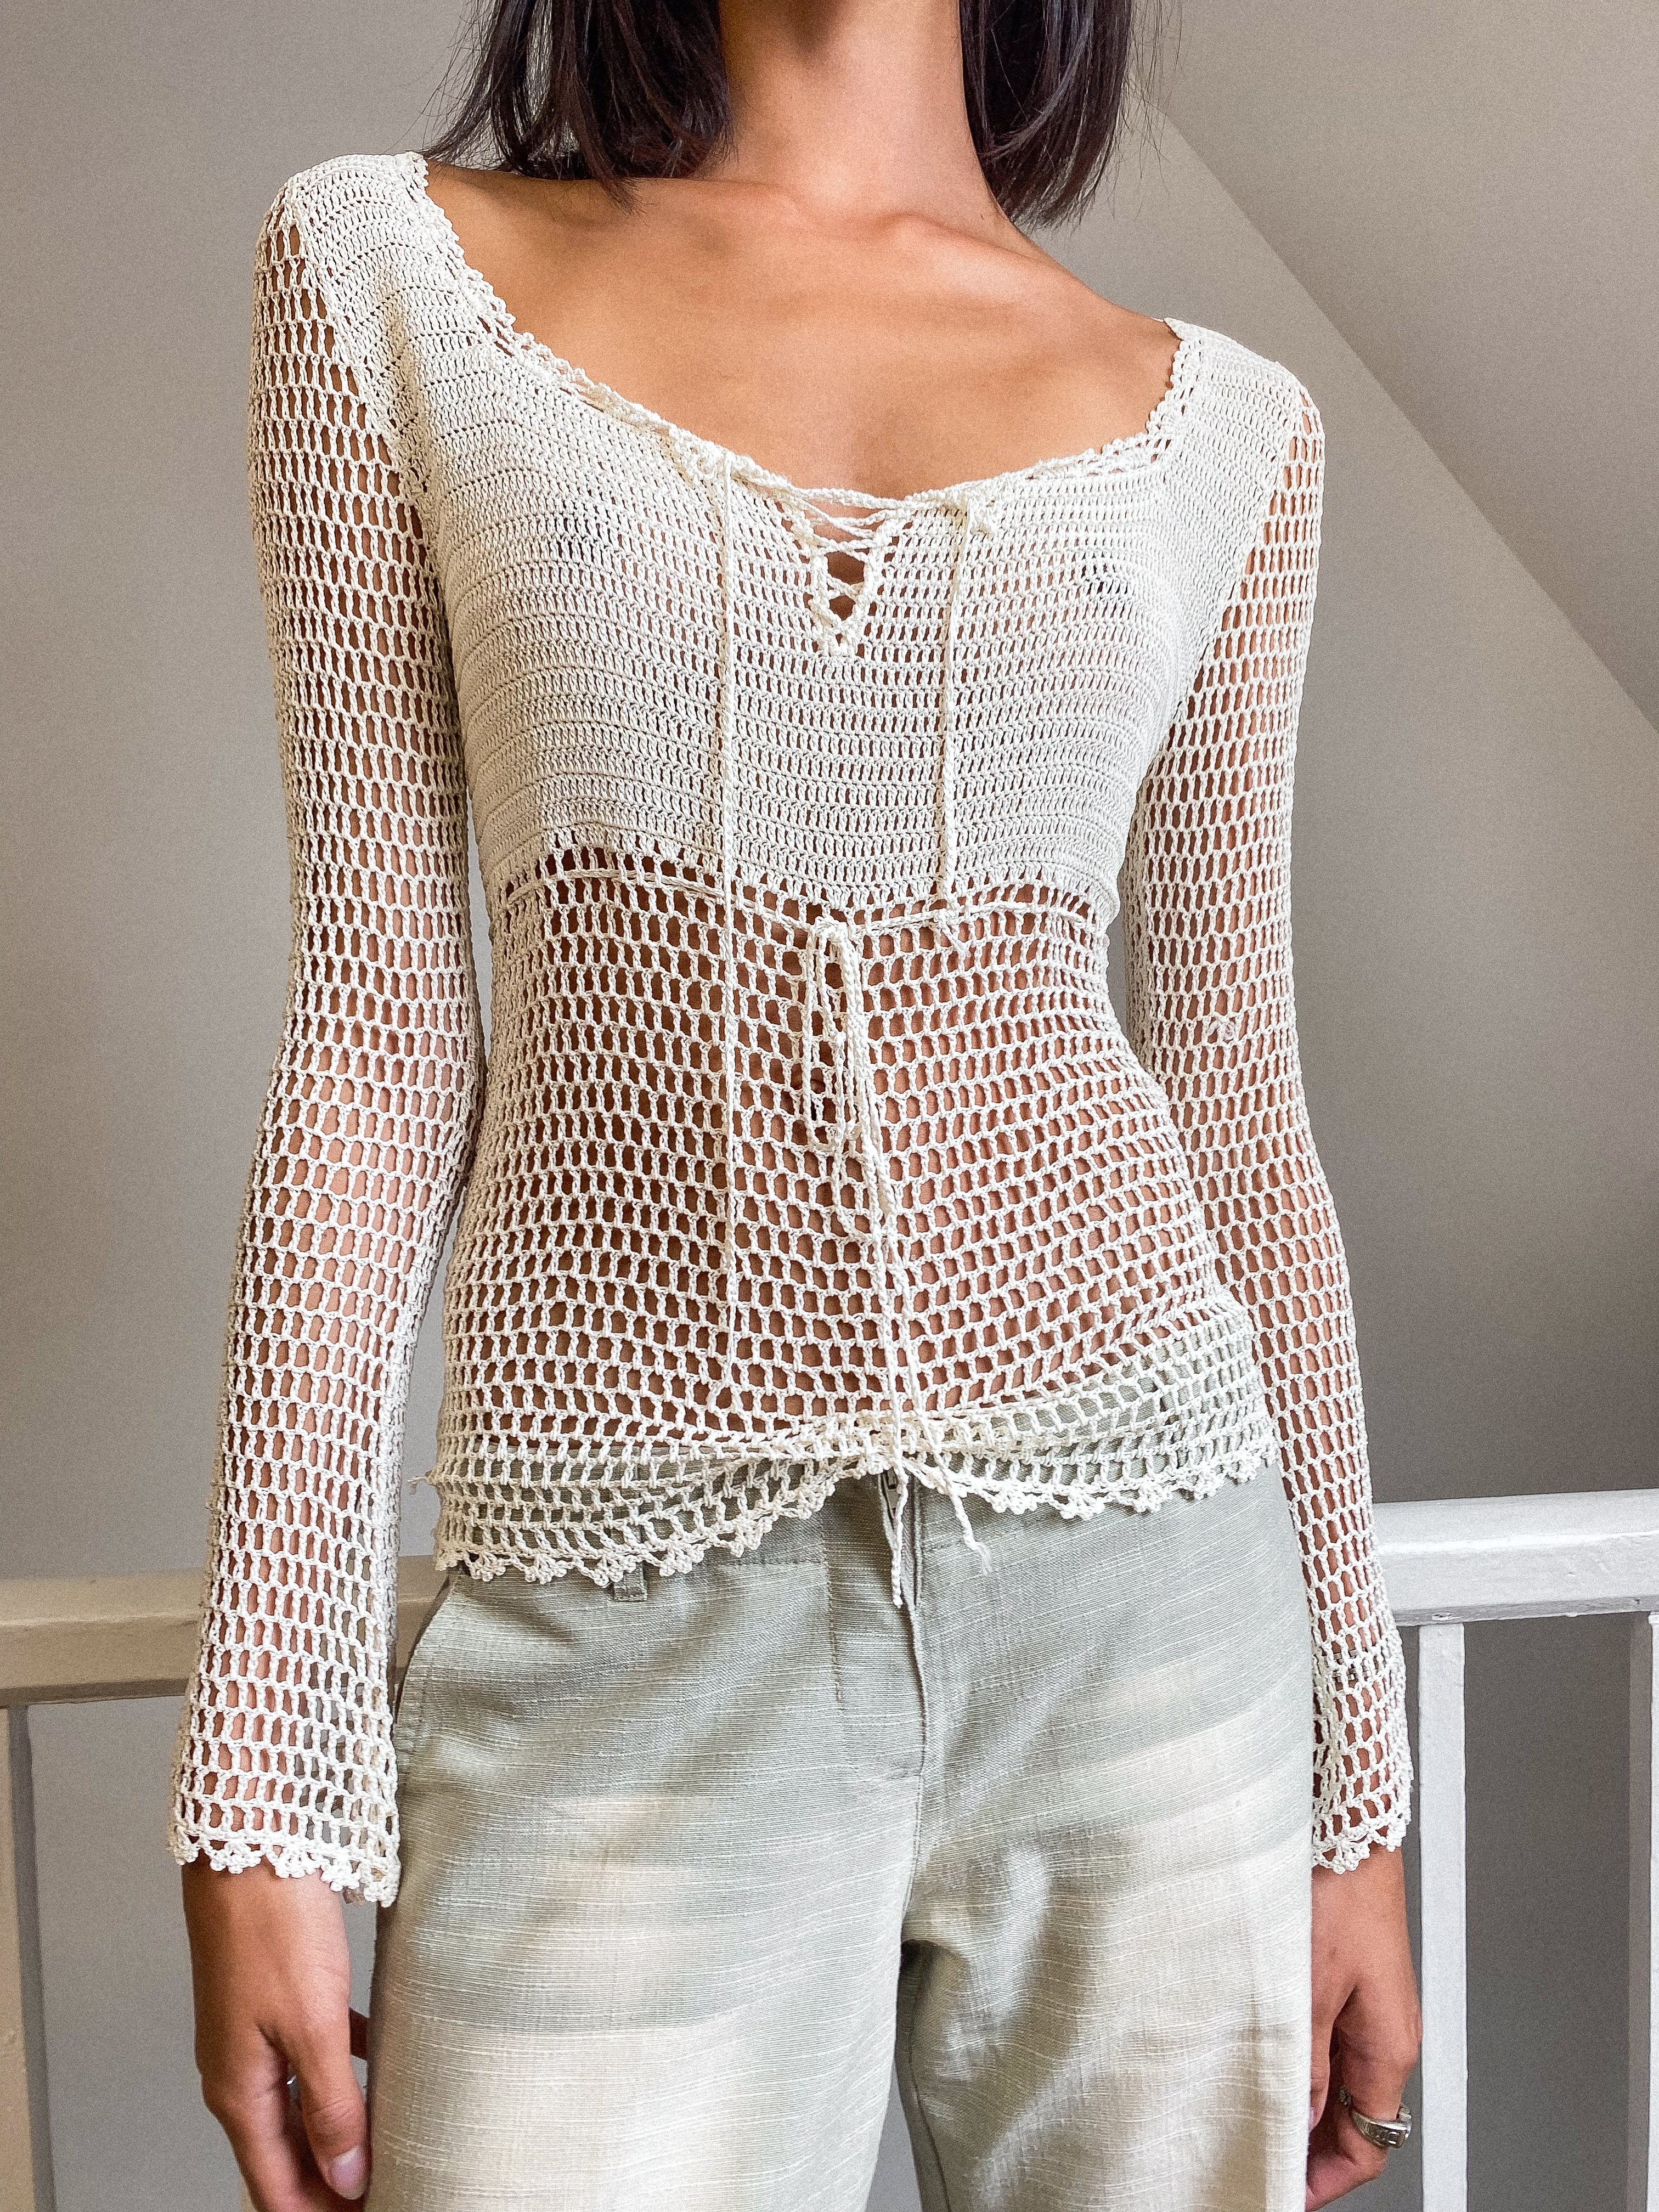 Magnolia Crochet Knit Size M - L